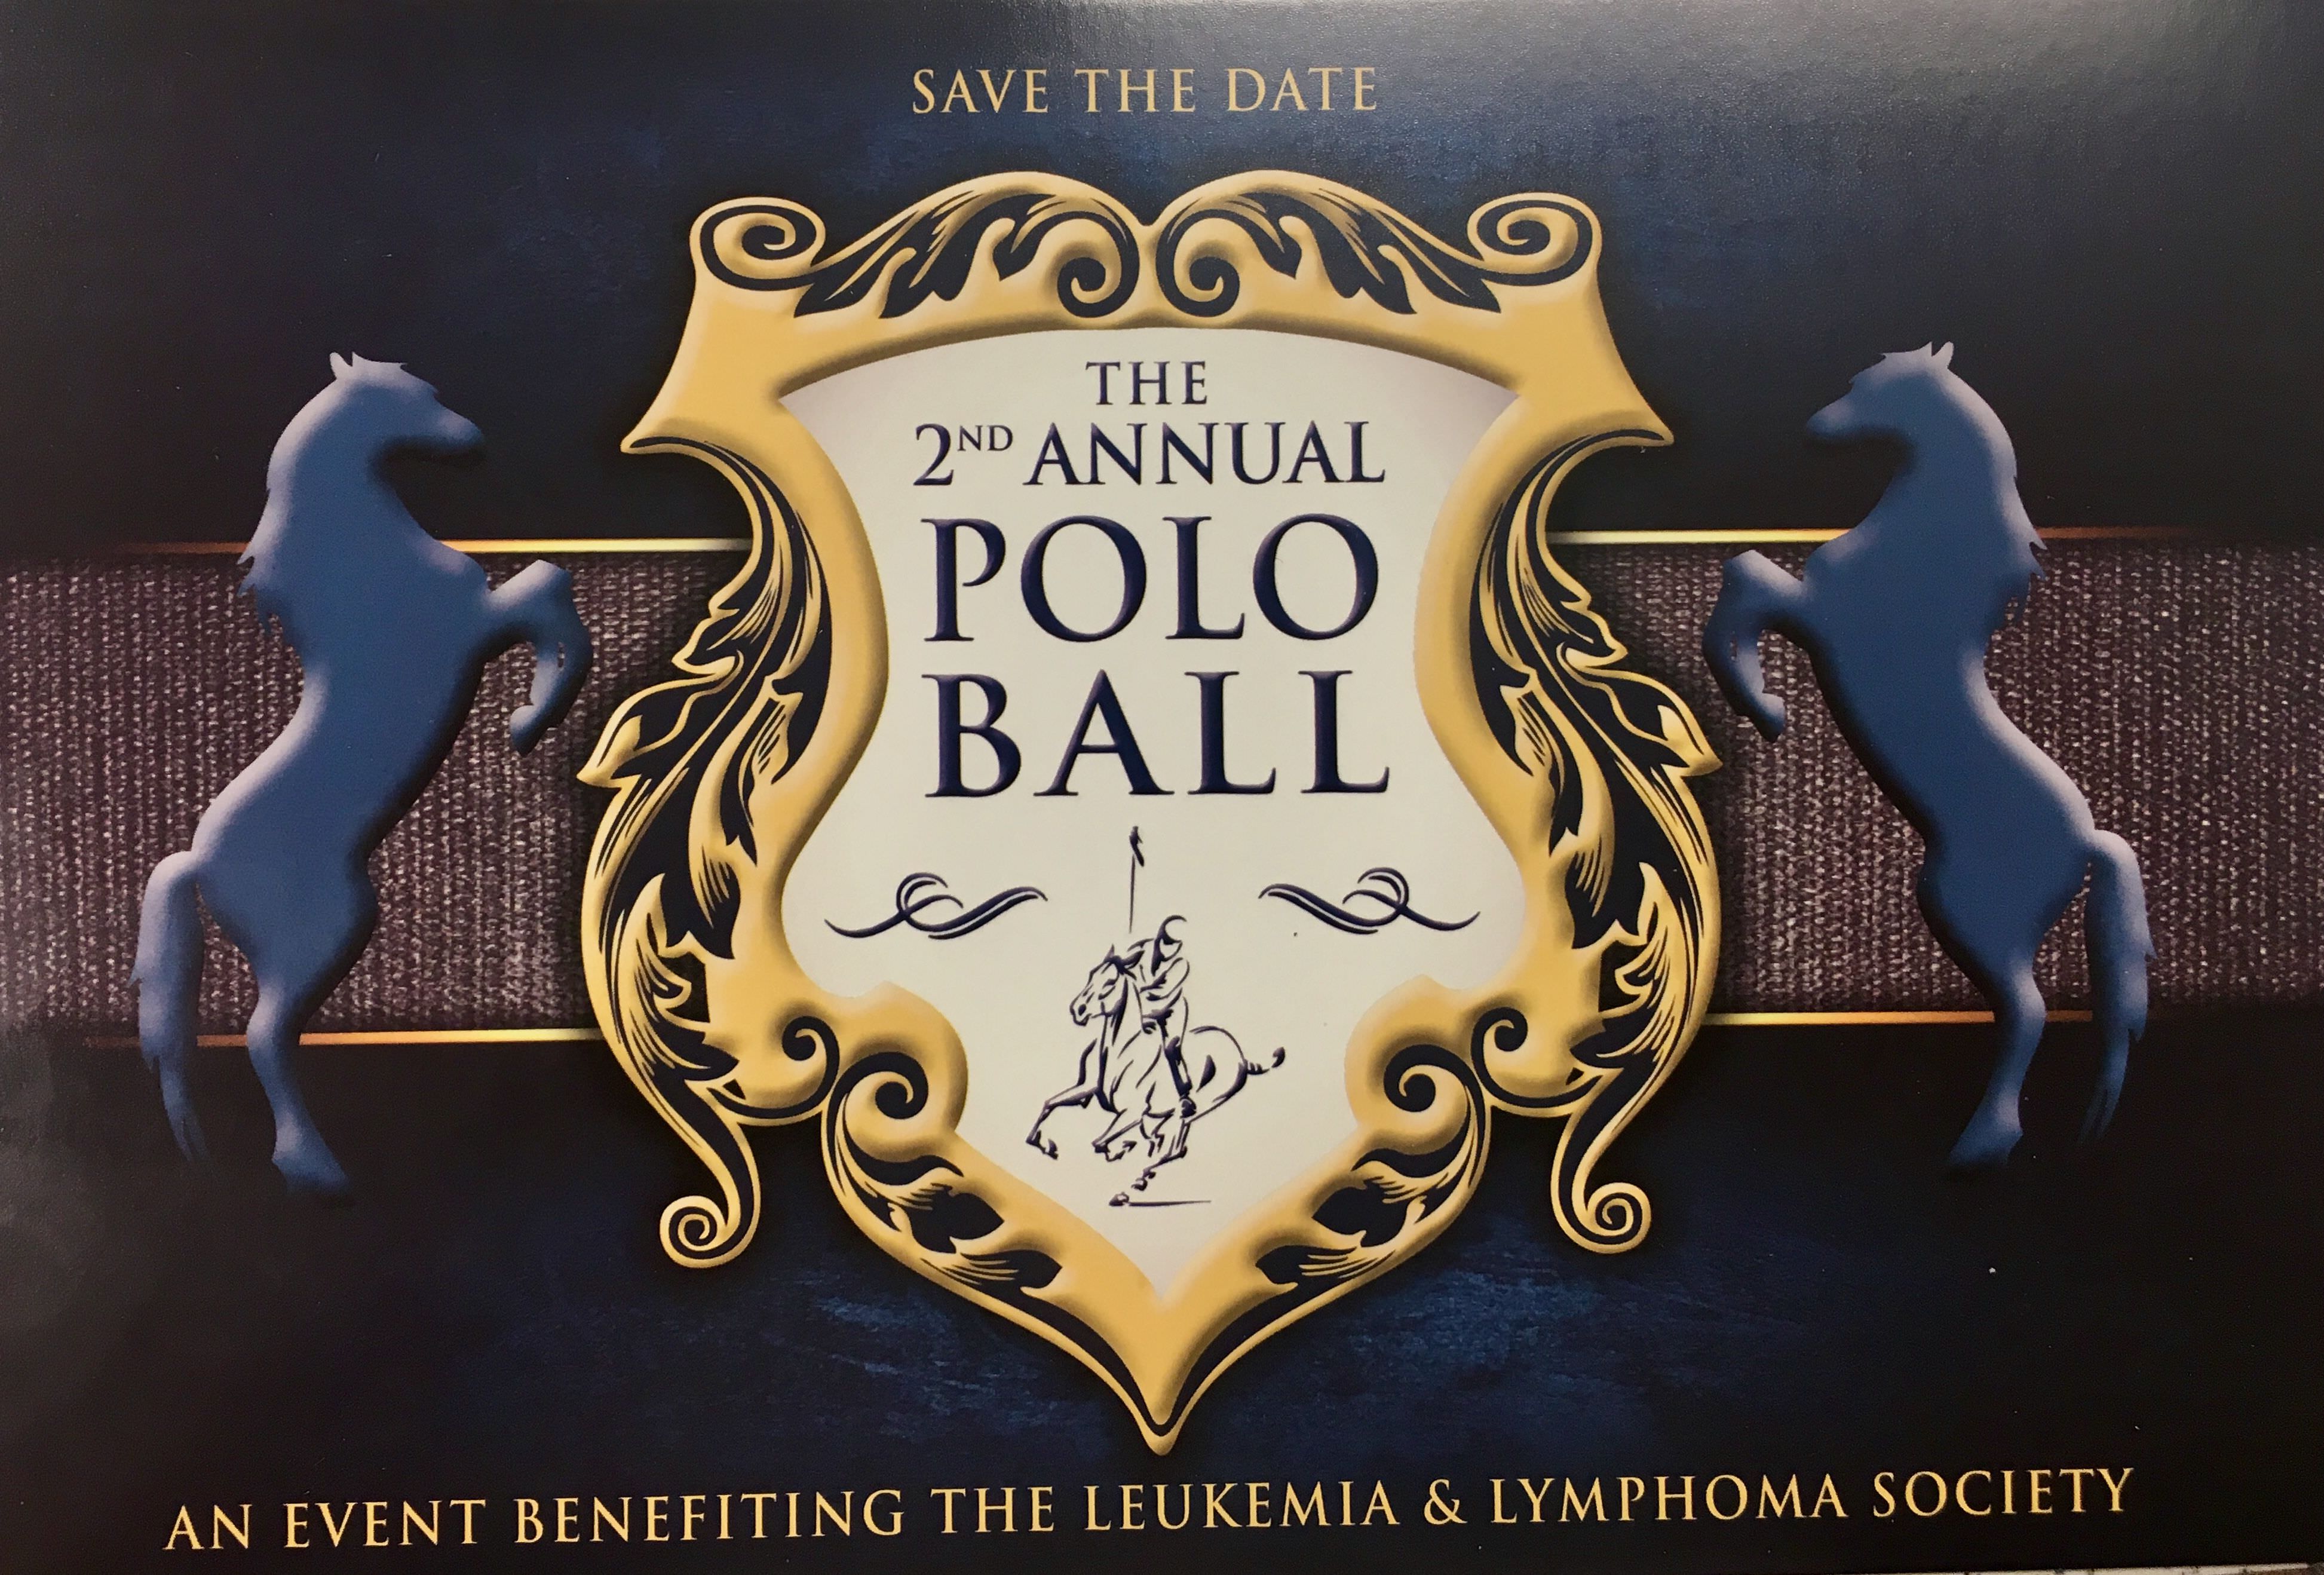 The 2nd Annual Polo Ball